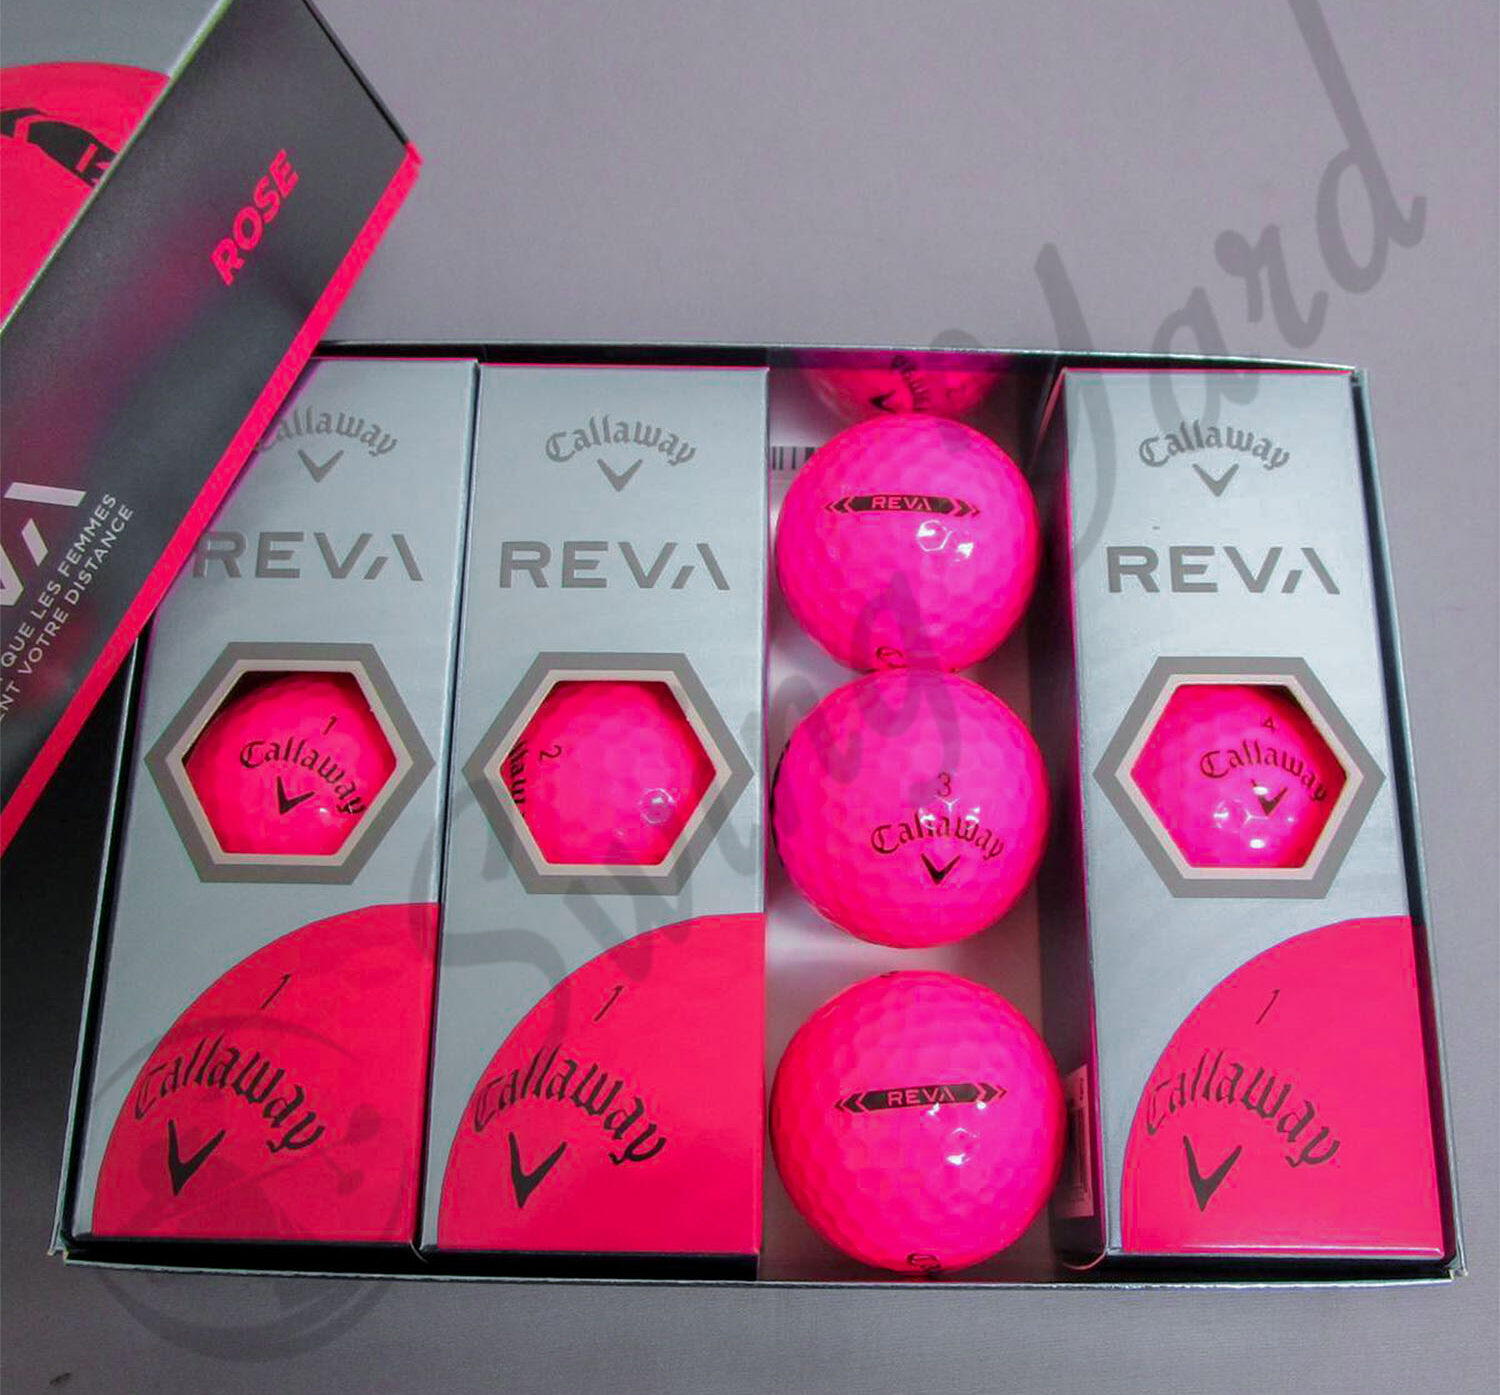 The 3 single packs and 3 balls inside the Callaway Reva box